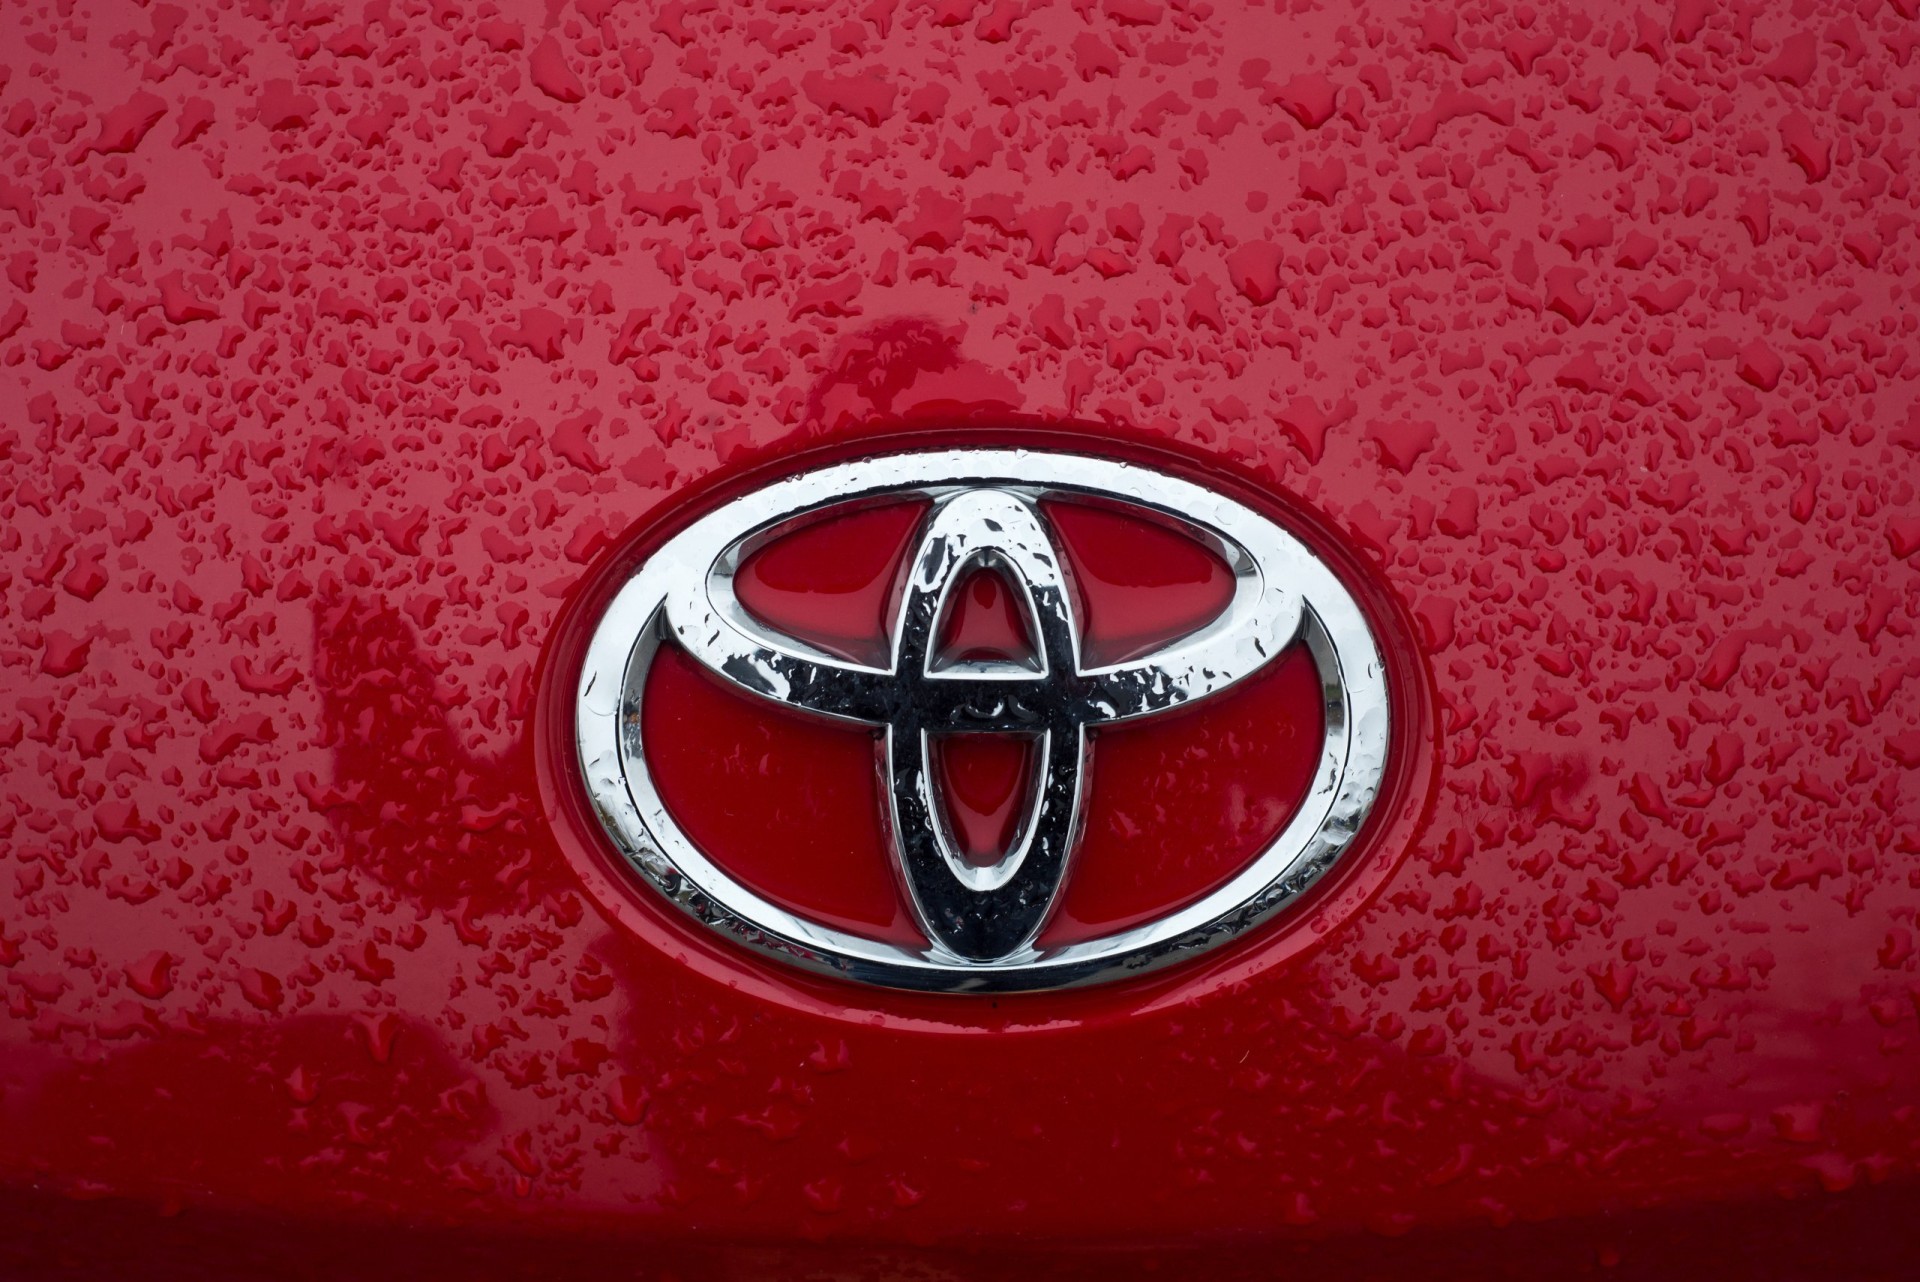 Closeup of rain drops on Toyota logo on red car 